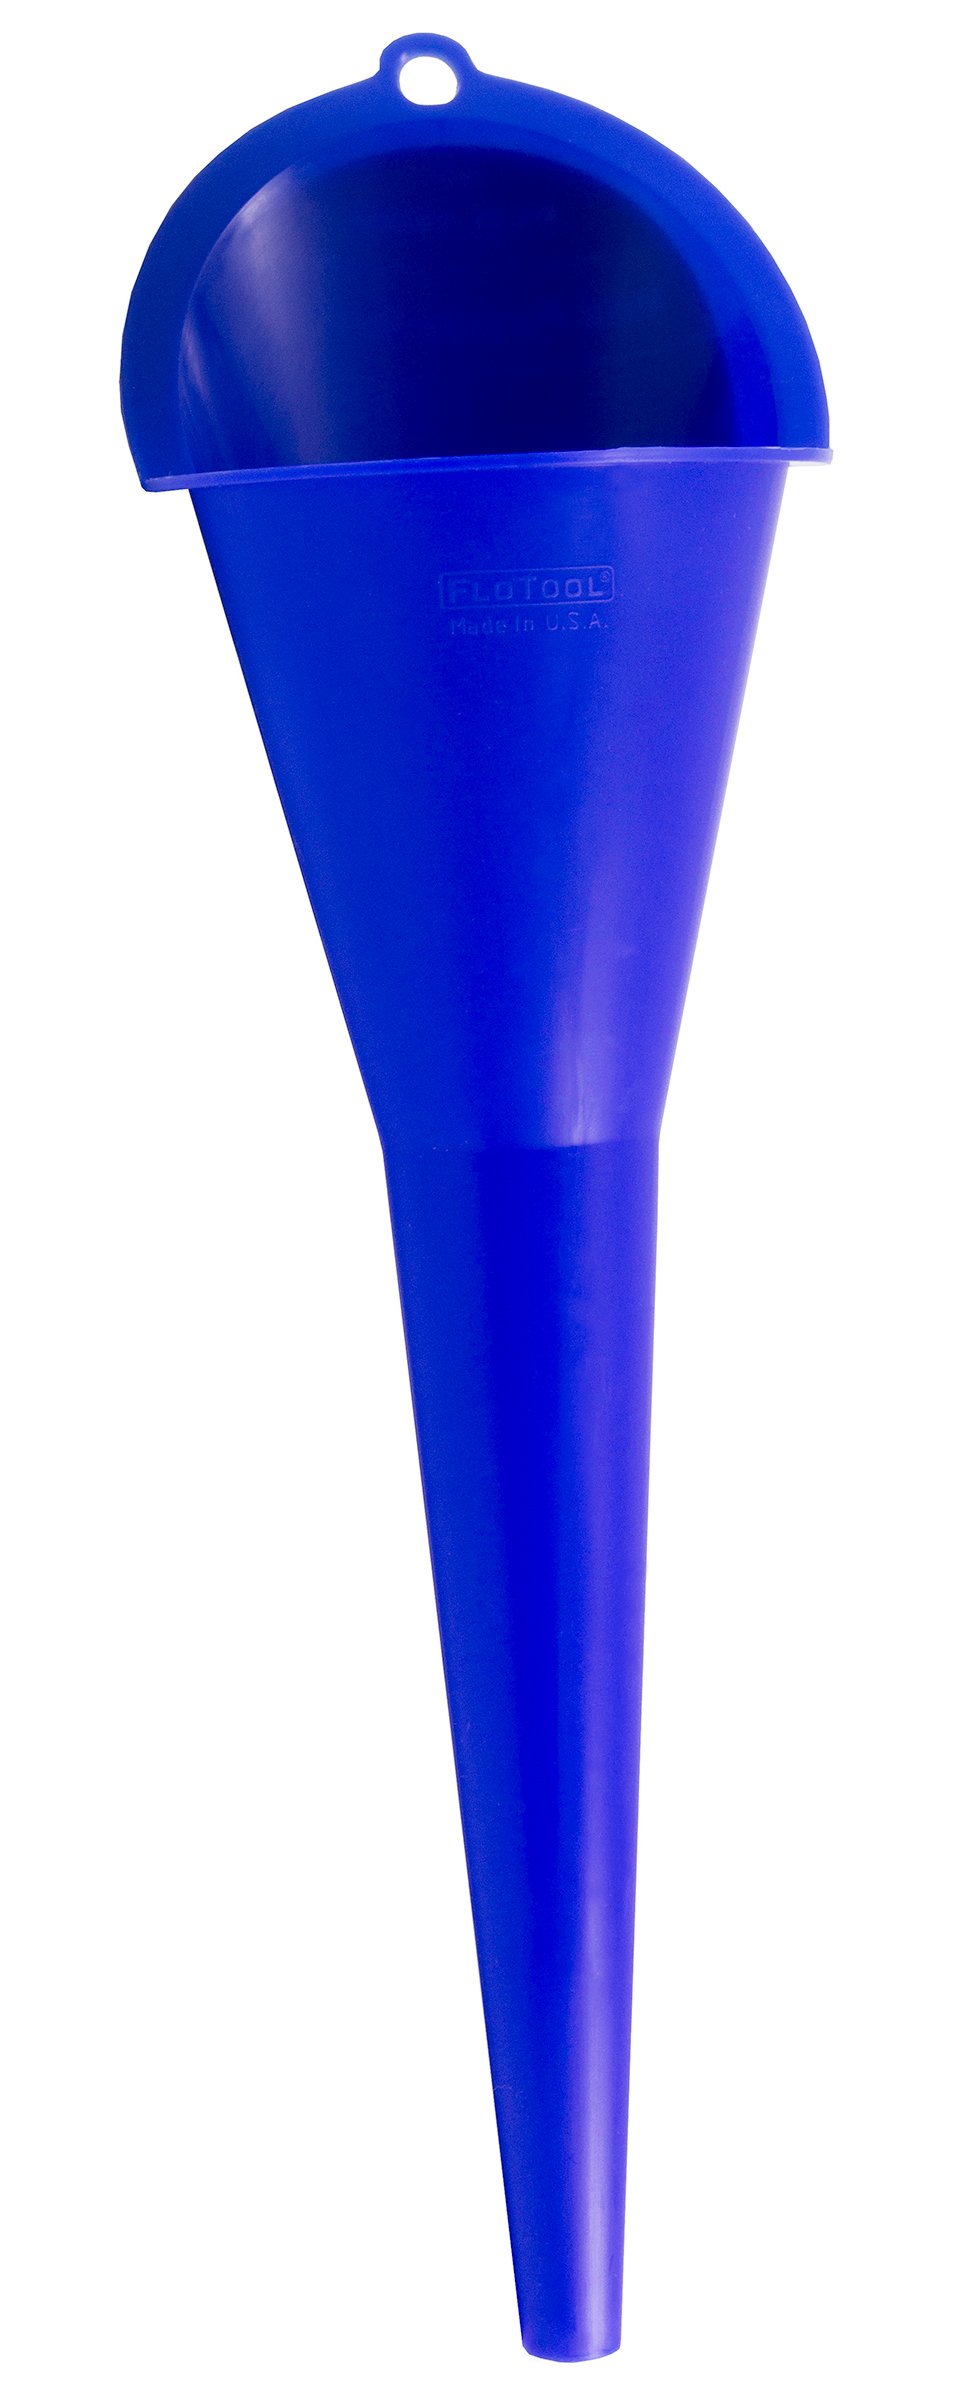 FloTool Spill Saver Multi-Purpose Funnel $0.98